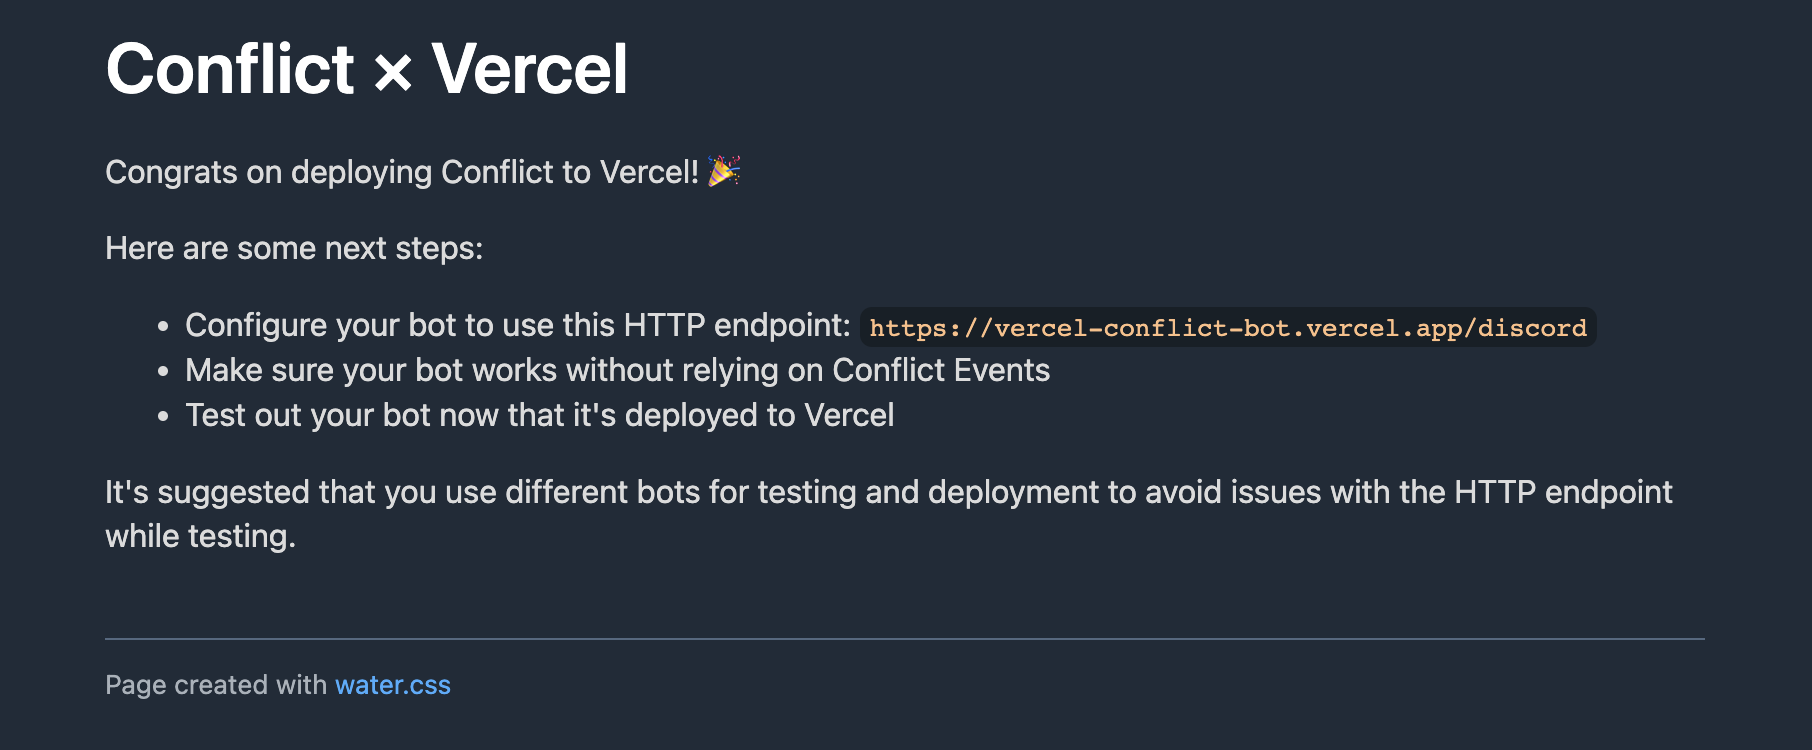 https://cloud-no9teffvg-hack-club-bot.vercel.app/0image.png